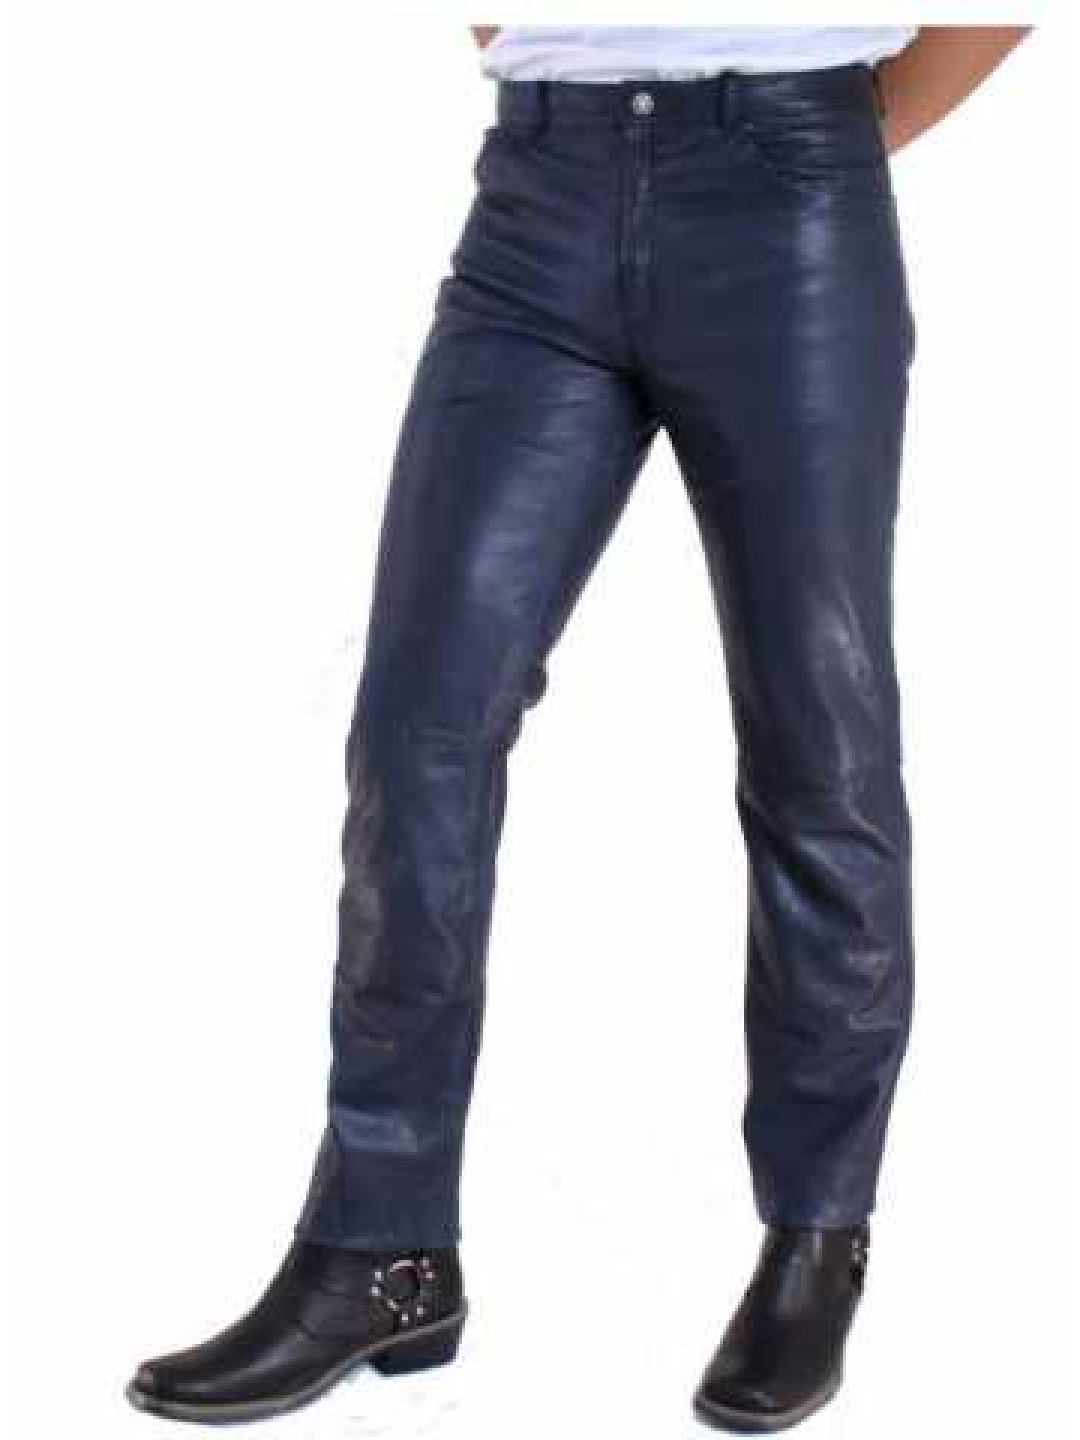 Navy Blue, dark Blue super Skintight skinny leather jeans tight fit | eBay